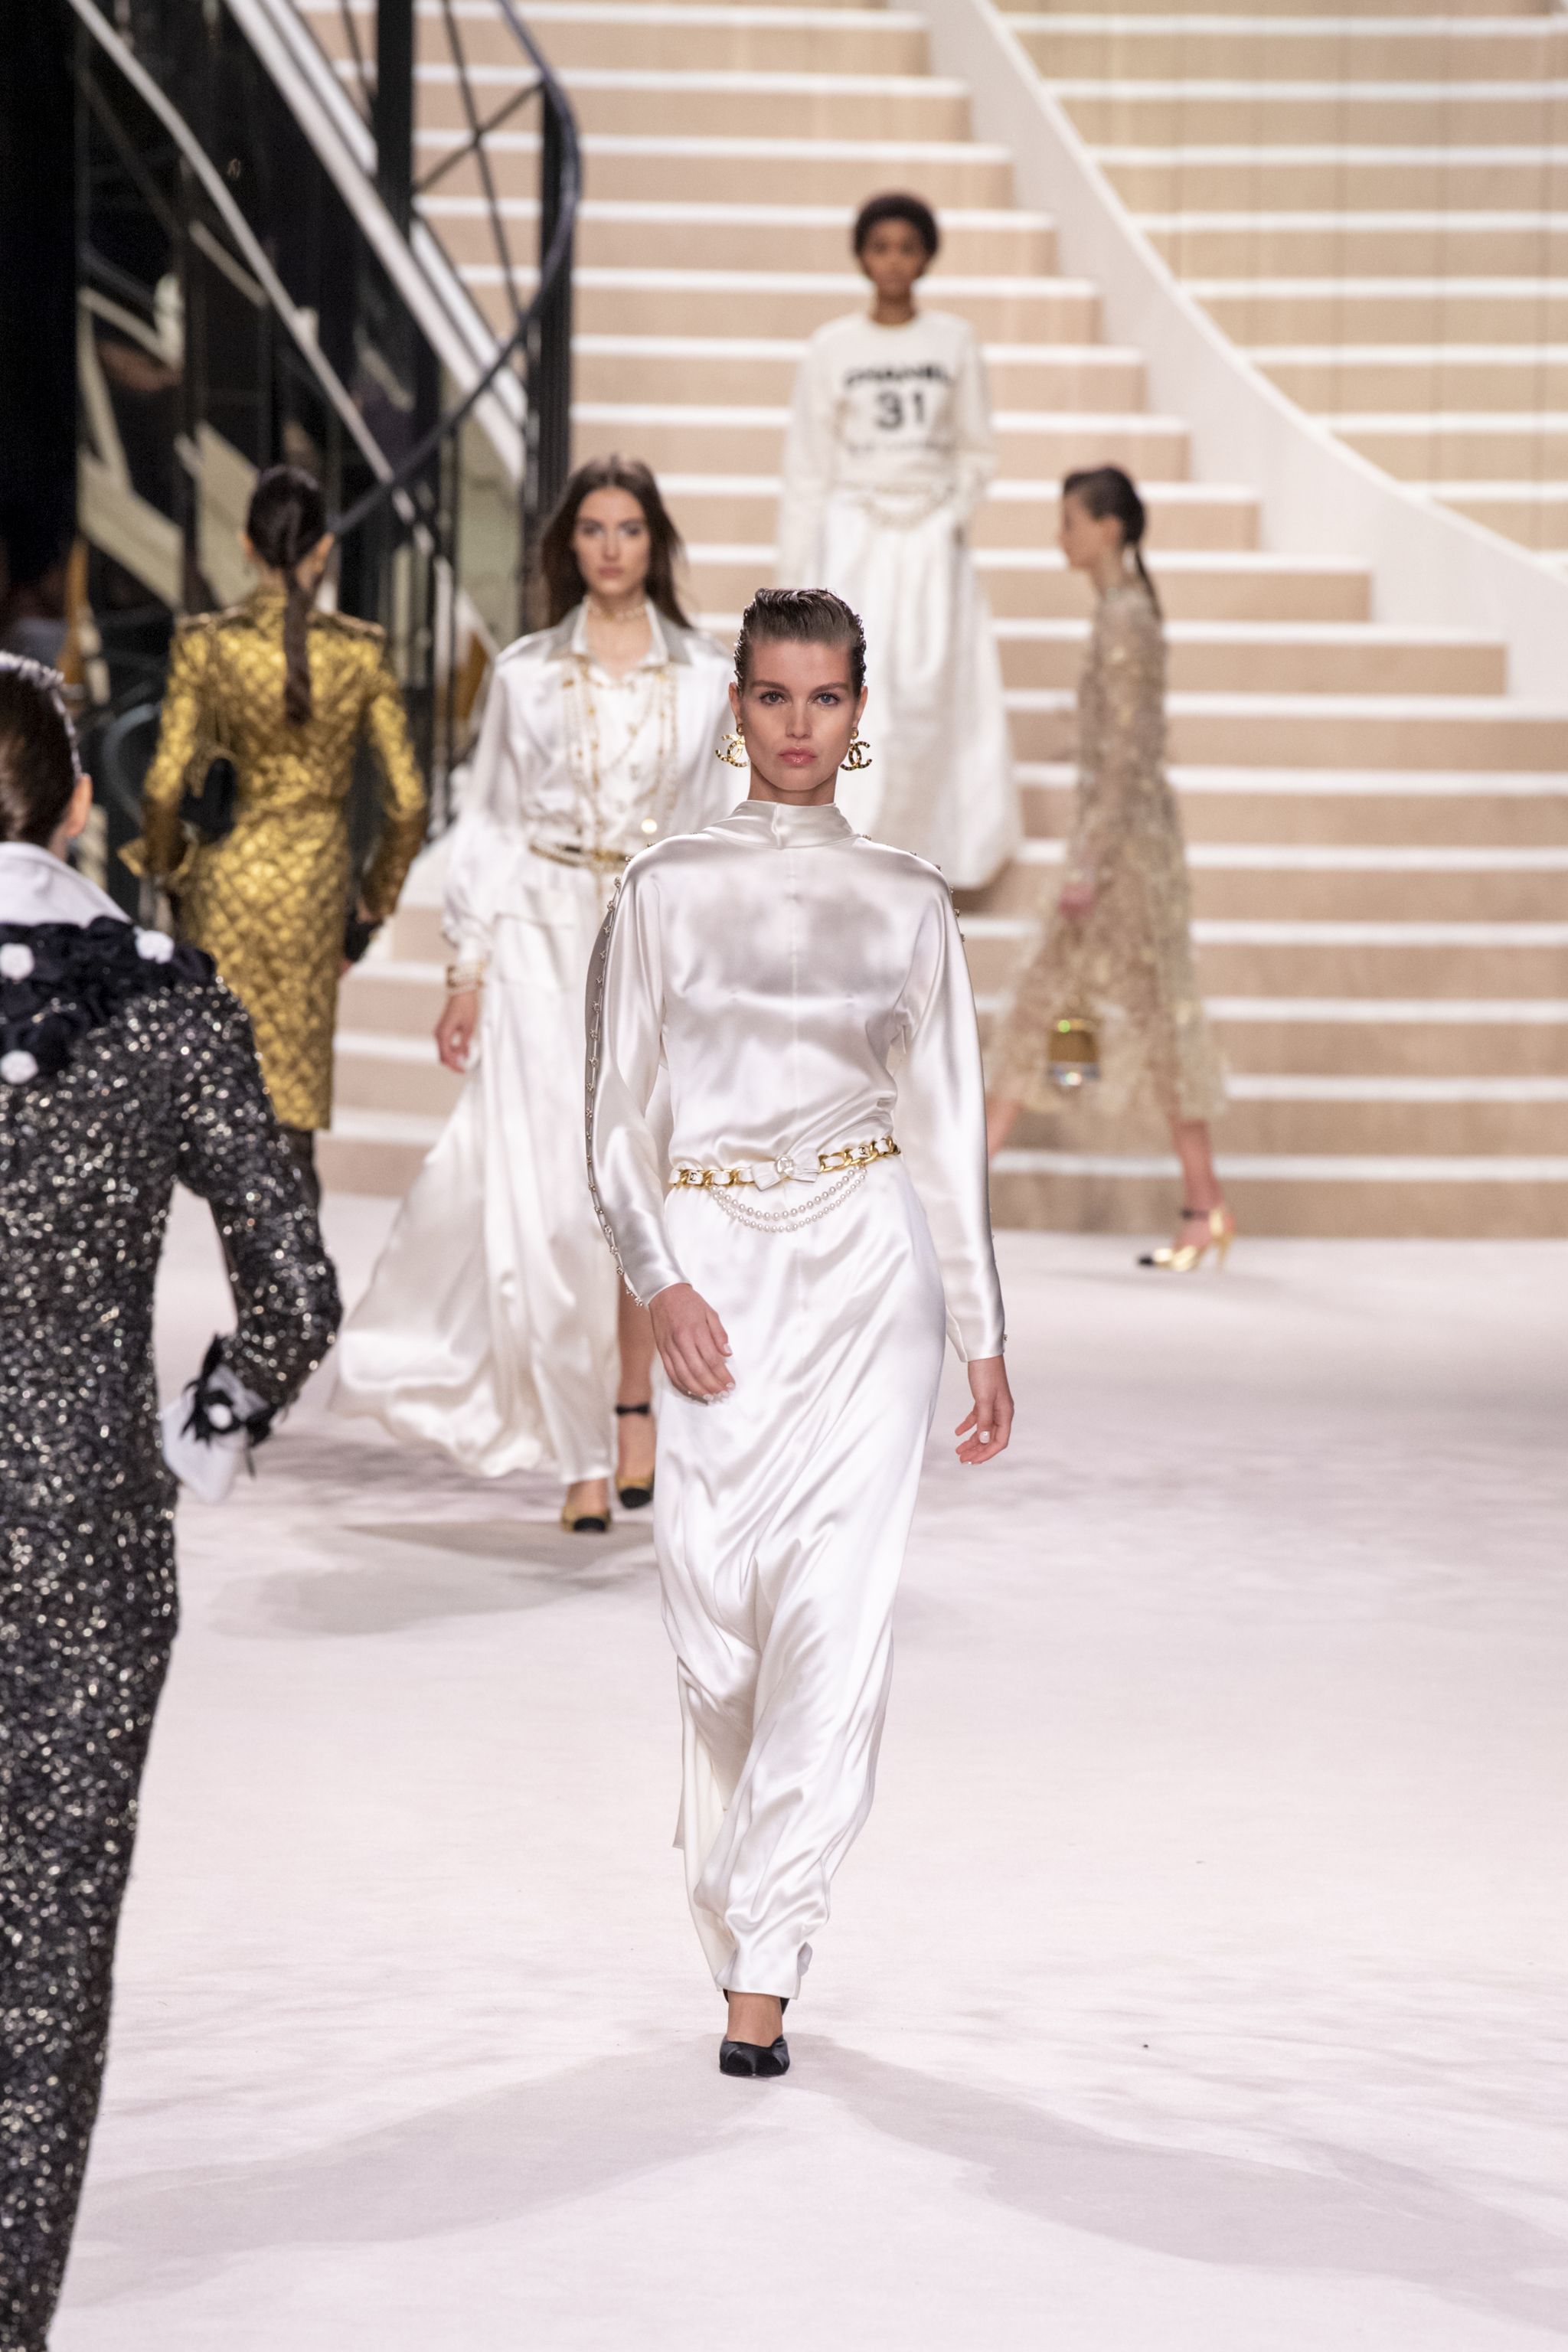 Chanel and Prada postpone upcoming fashion shows due to coronavirus